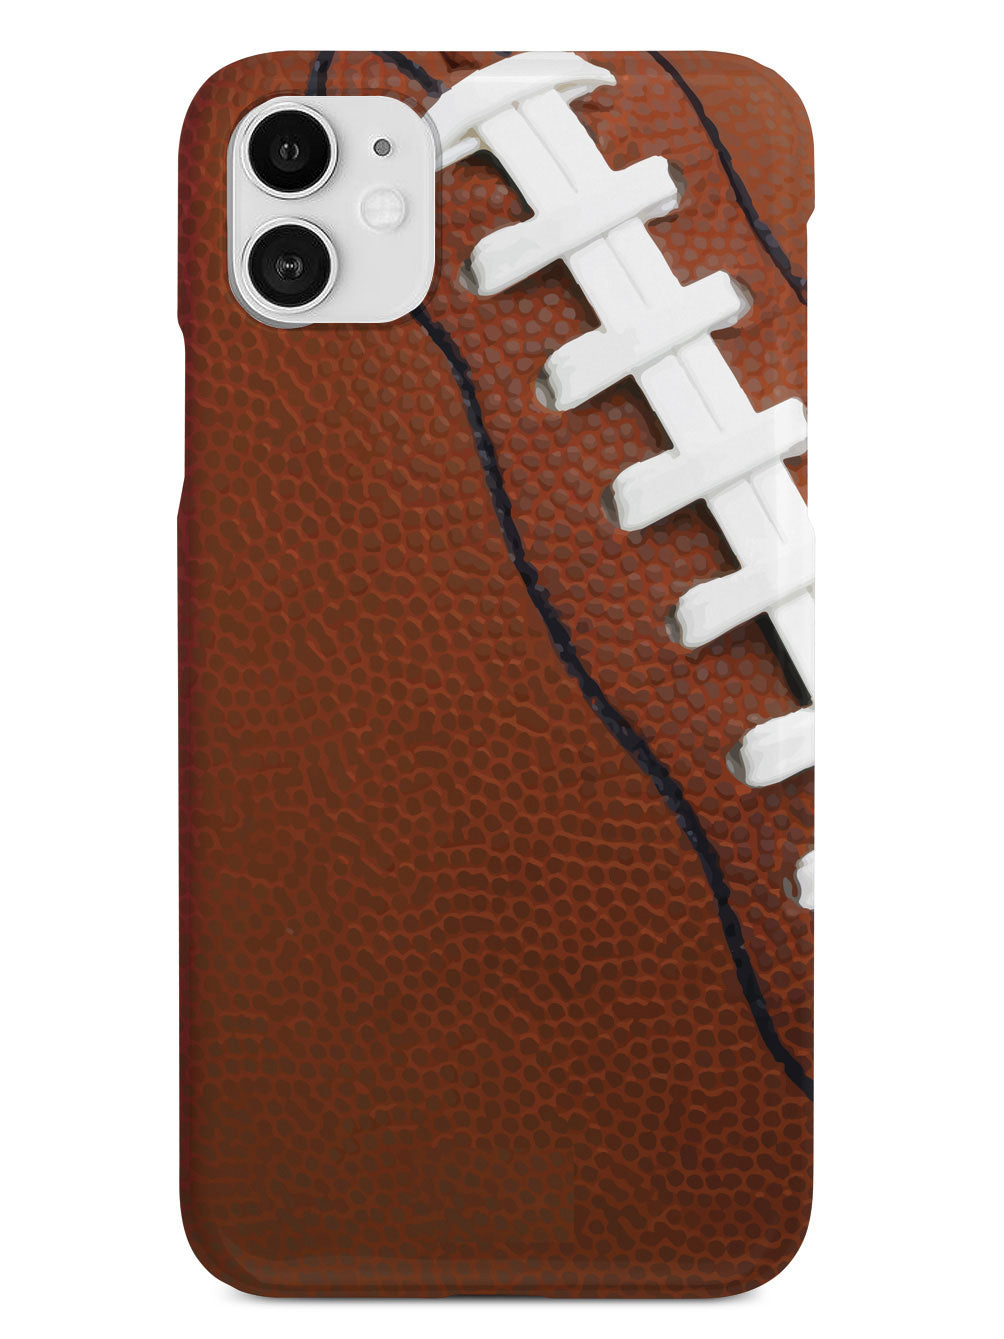 Football Texturized Case